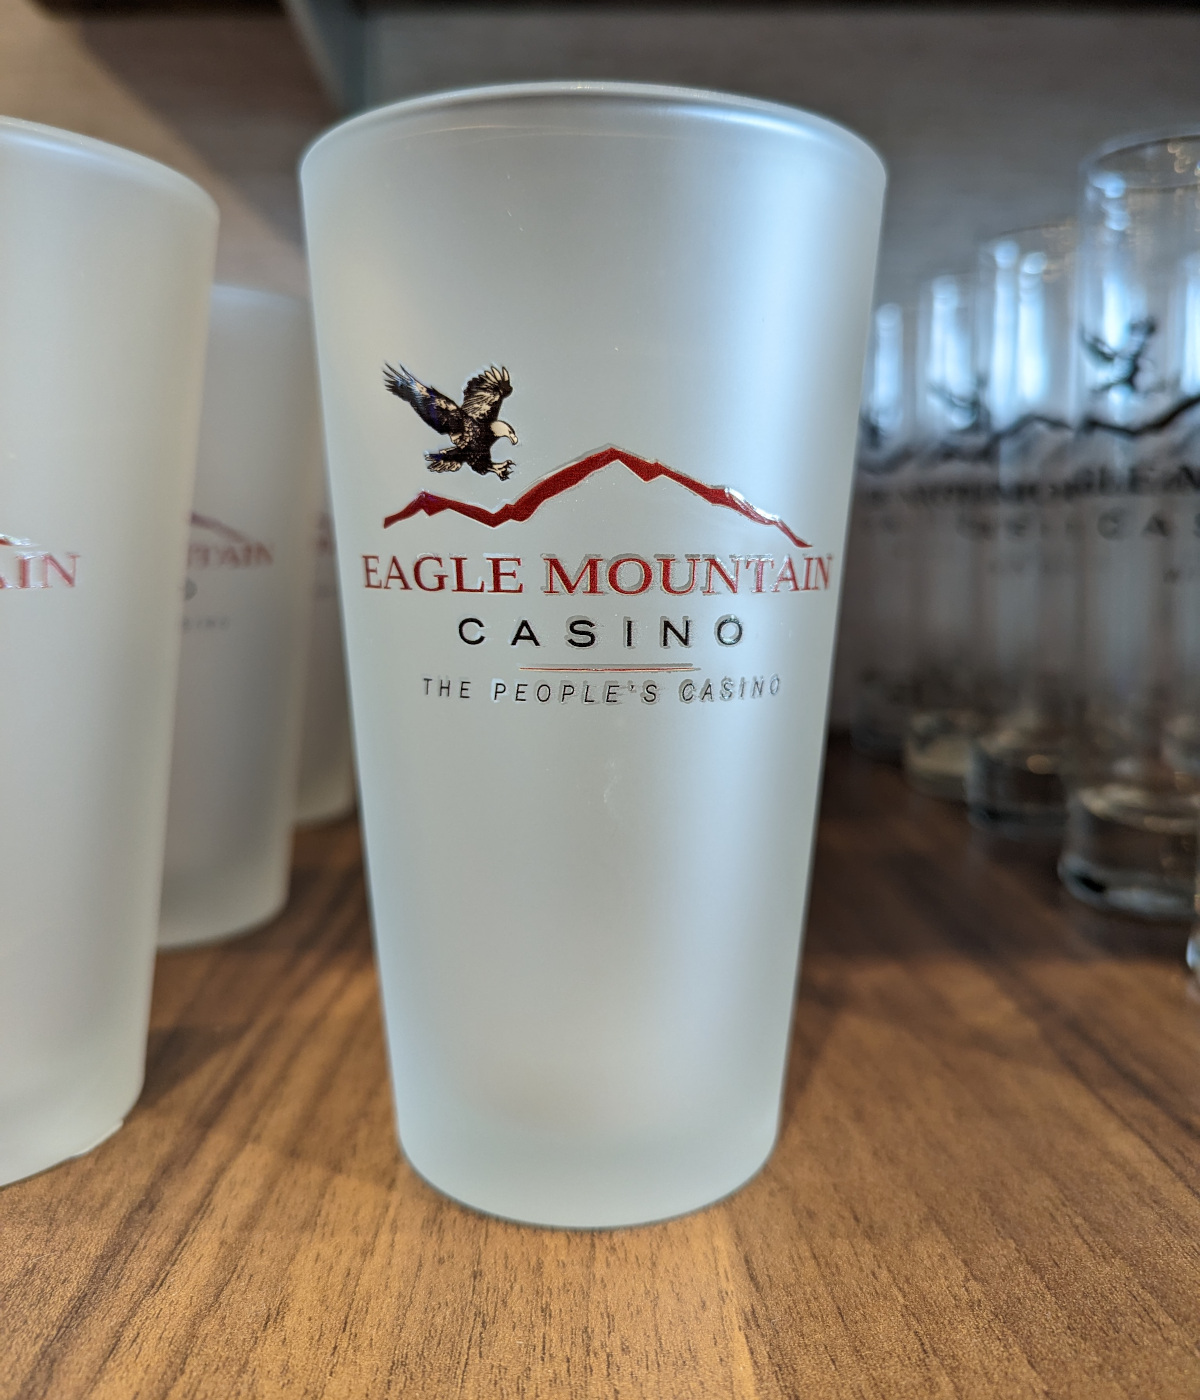 eagle mountain casino - items on sale - casino glass